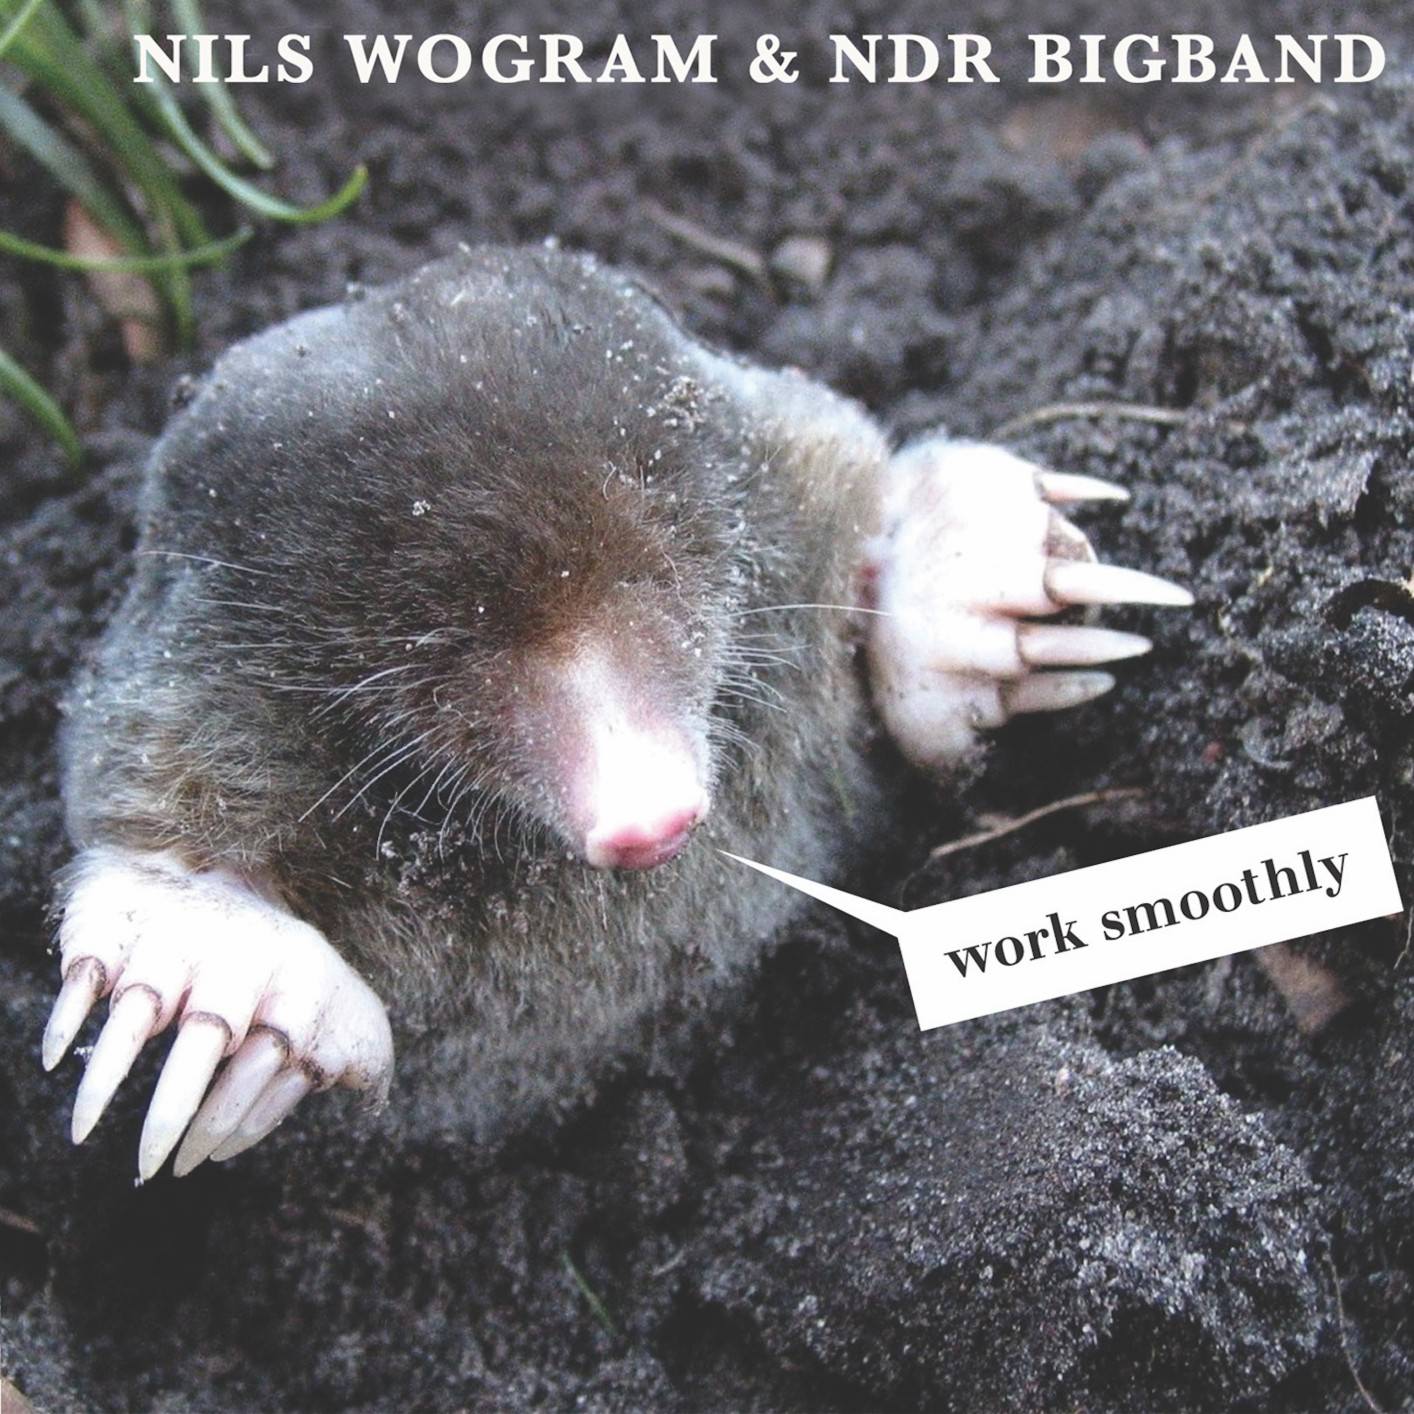 Nils Wogram & NDR Bigband – Work Smoothly (2018) [FLAC 24bit/44,1kHz]